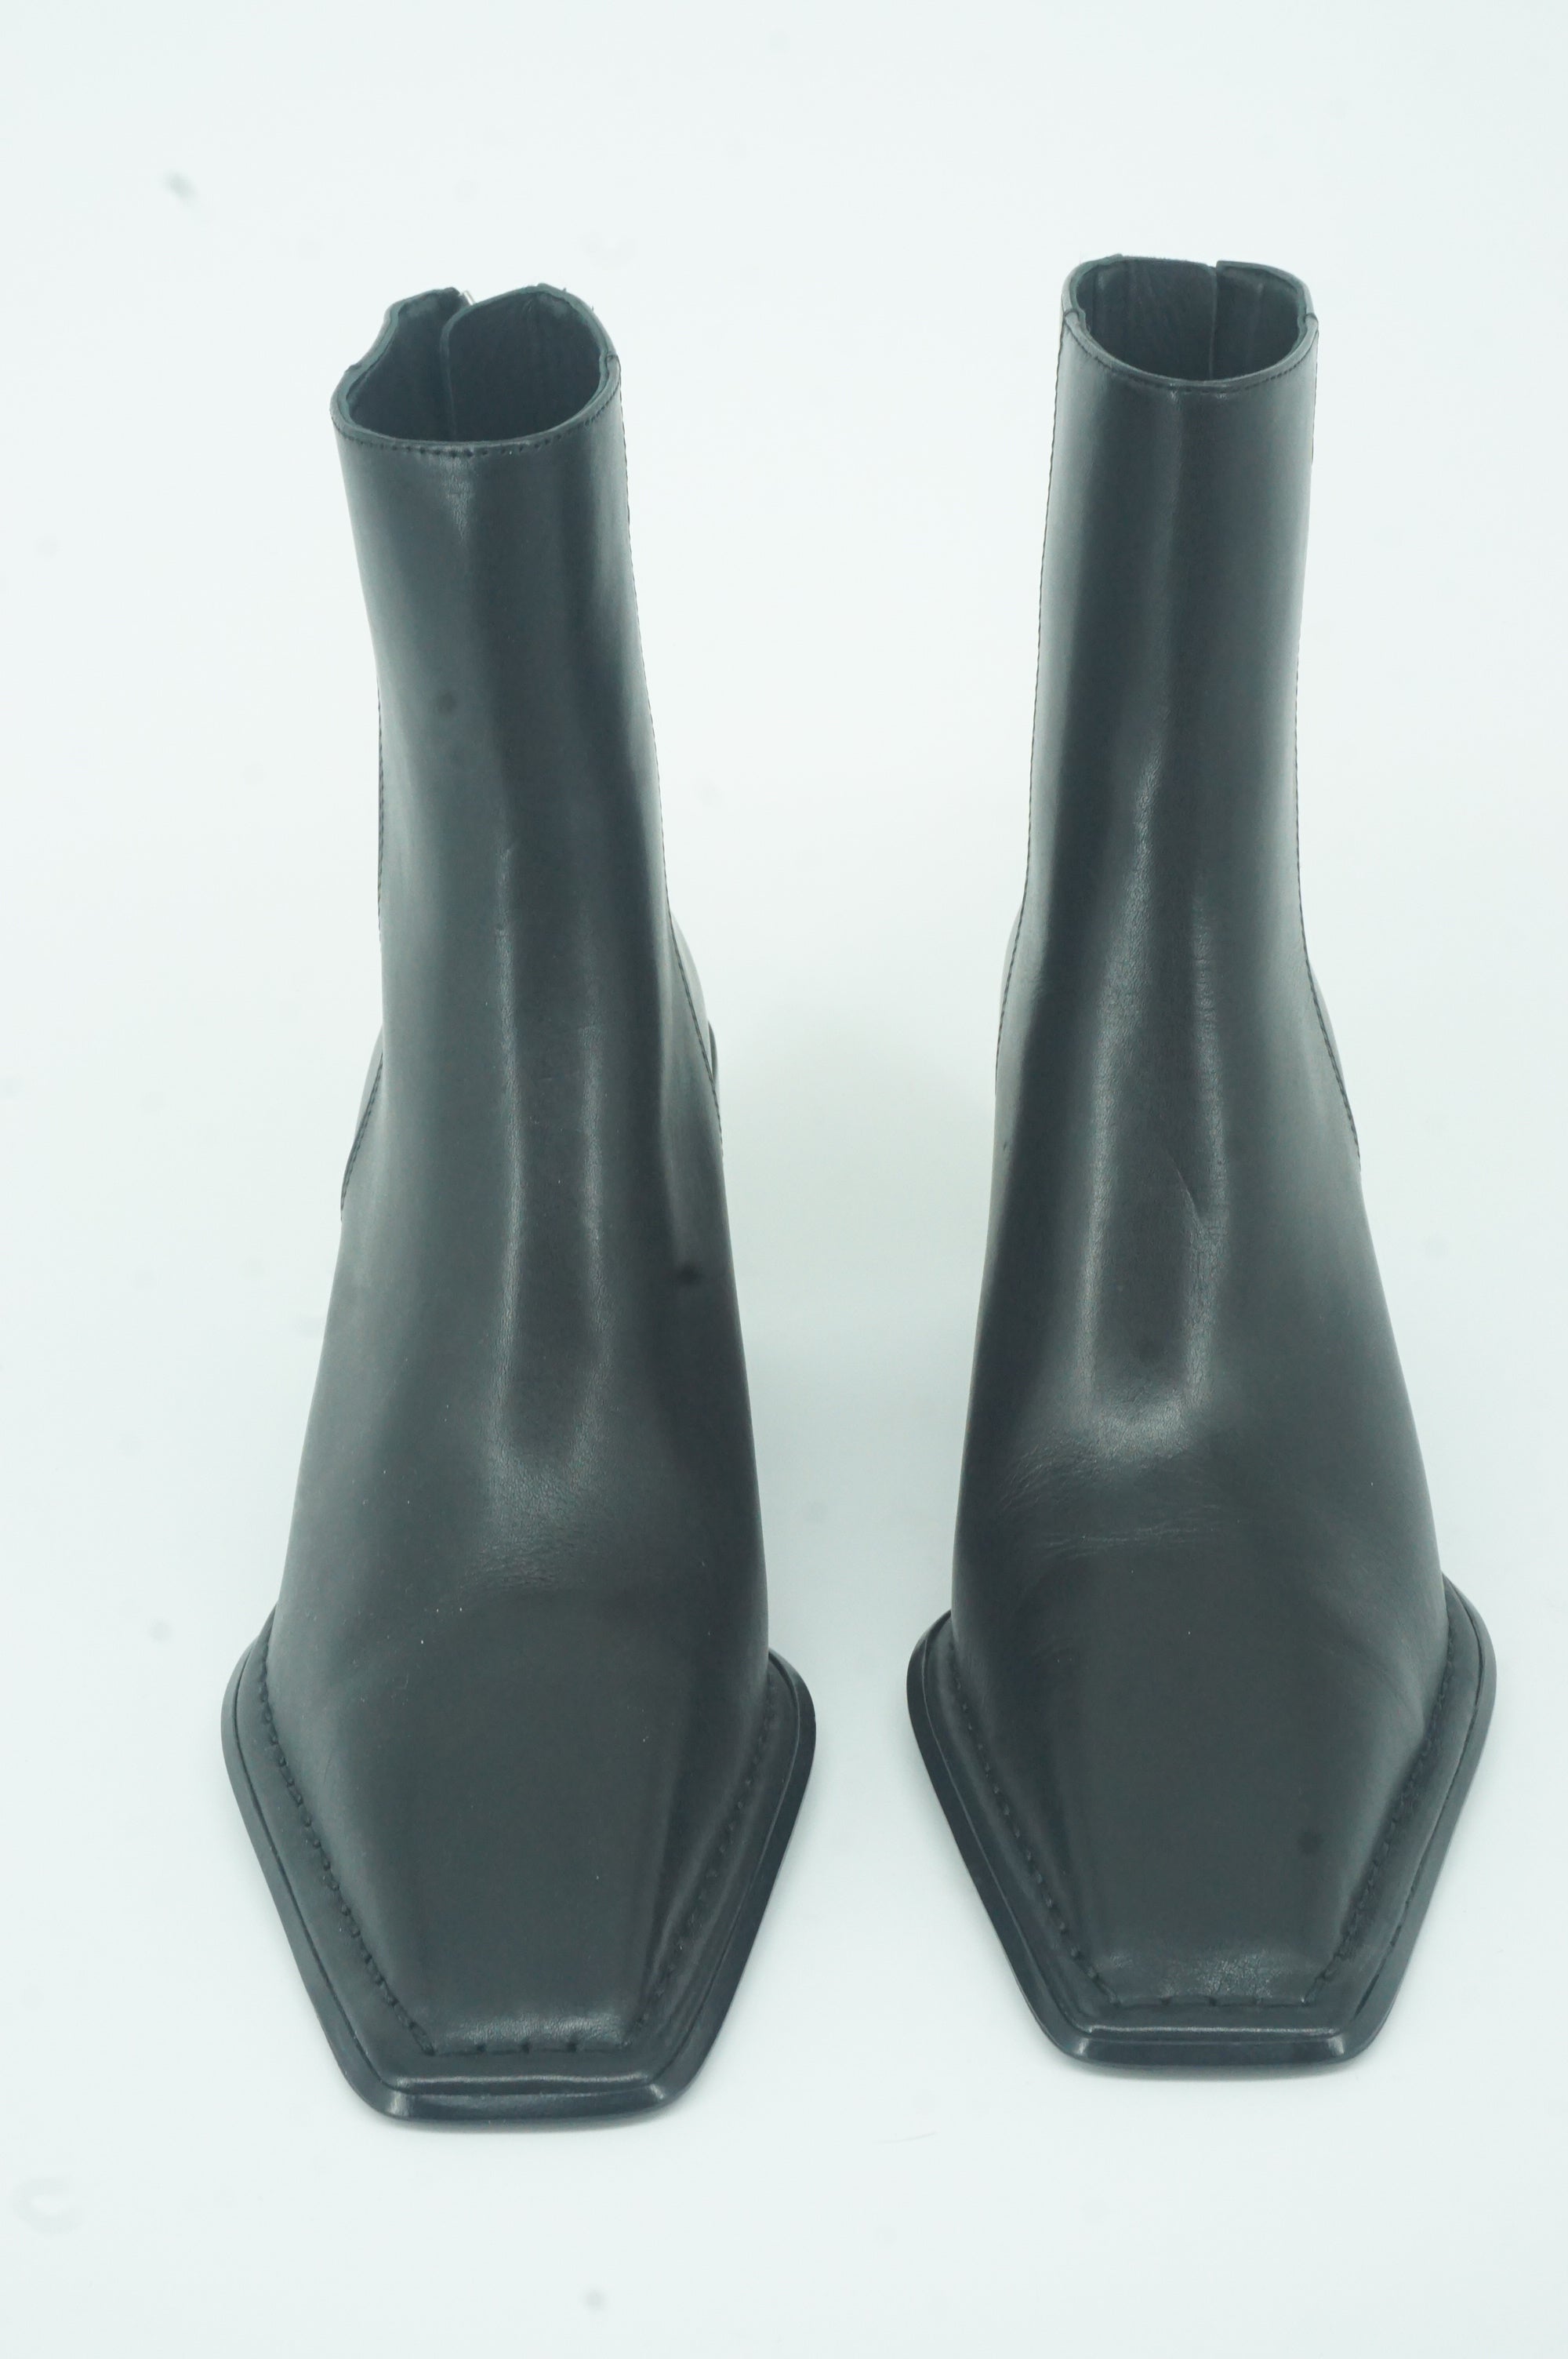 Alexander Wang Parker Square Toe High Block Heel Ankle Booties SZ 38.5 New $750